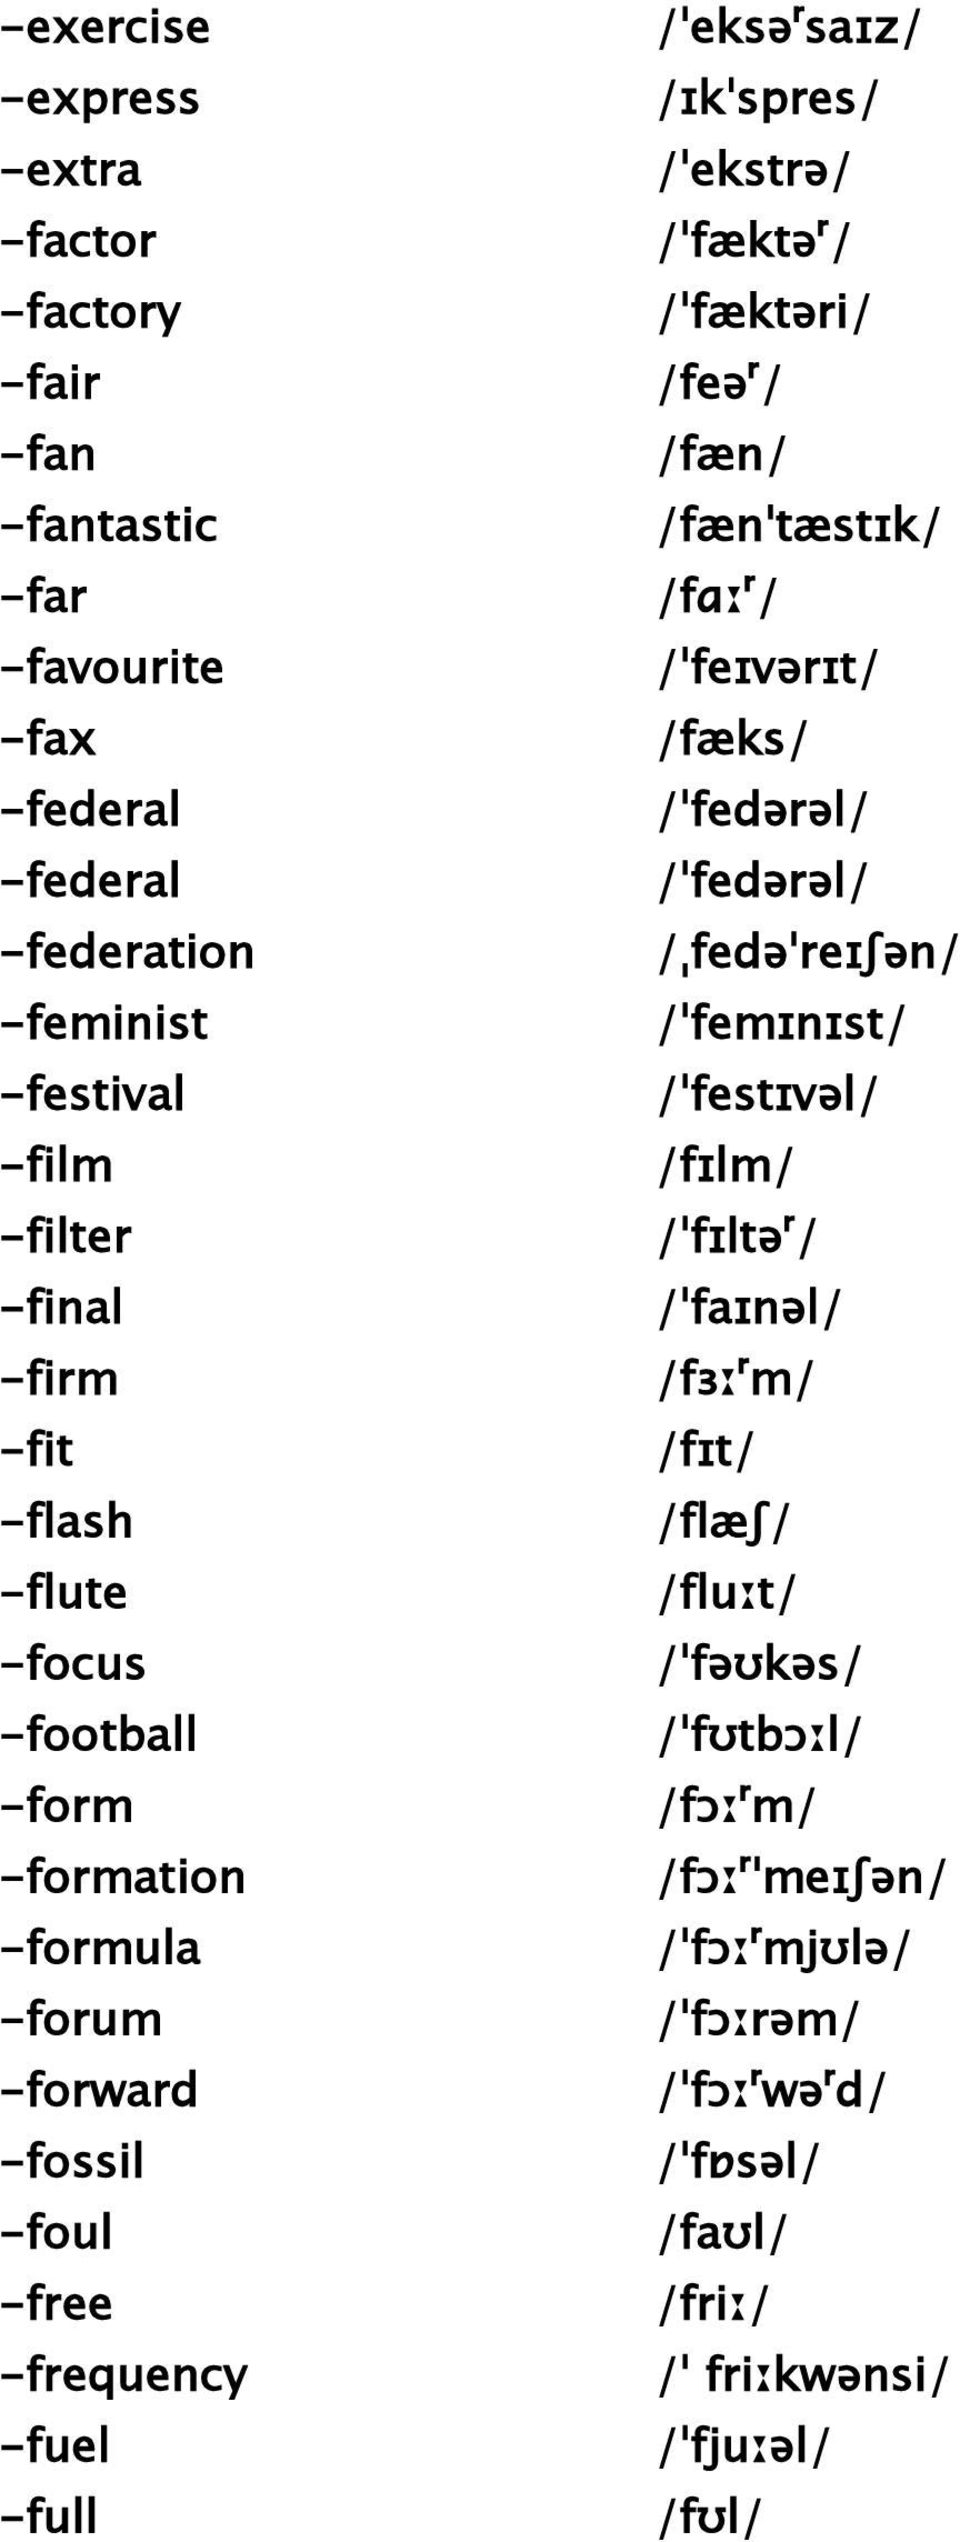 -filter /ˈfɪltəʳ/ -final /ˈfaɪnəl/ -firm /fɜːʳm/ -fit /fɪt/ -flash /flæʃ/ -flute /fluːt/ -focus /ˈfəʊkəs/ -football /ˈfʊtbɔːl/ -form /fɔːʳm/ -formation